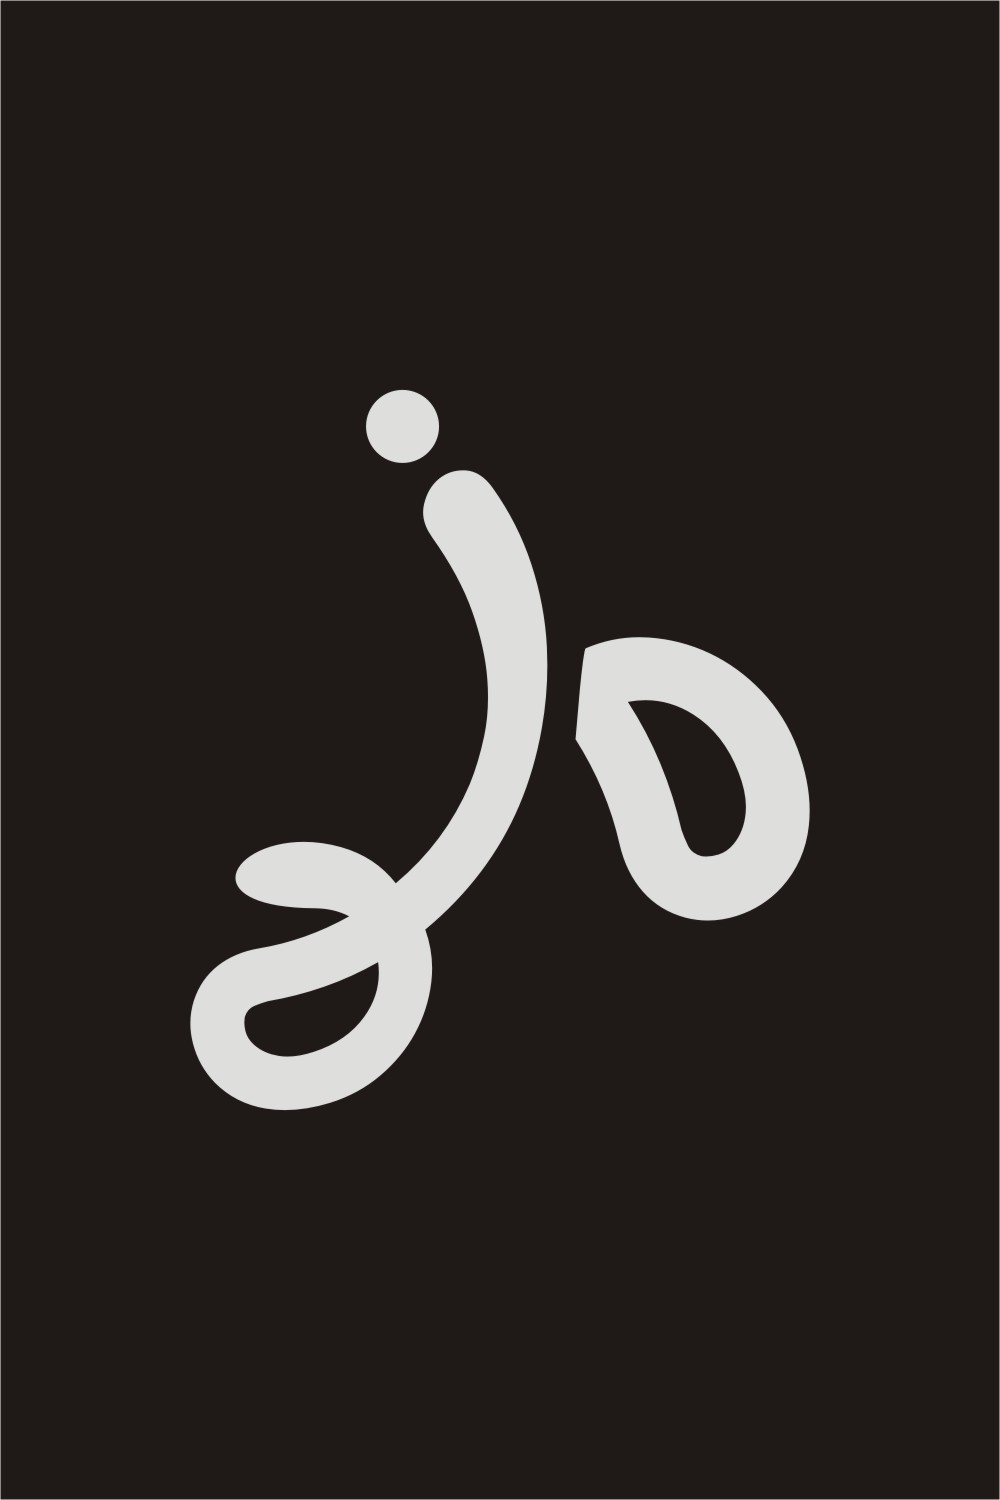 ''I'' monogram professional logo pinterest preview image.